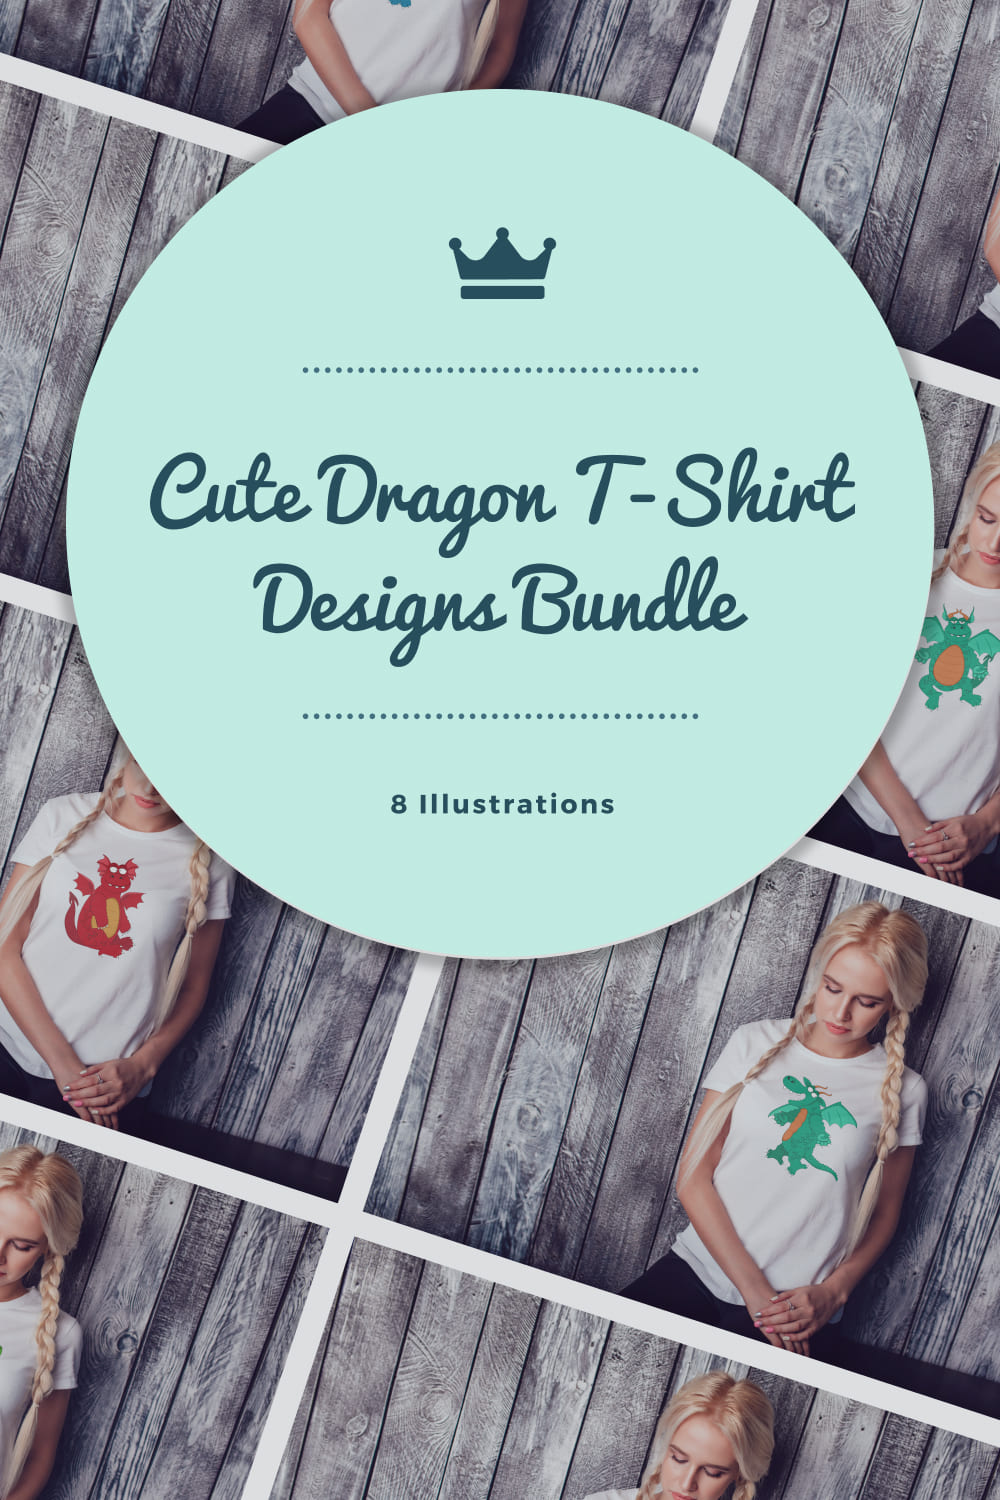 Cute Dragon T-shirt Designs Bundle - Pinterest.